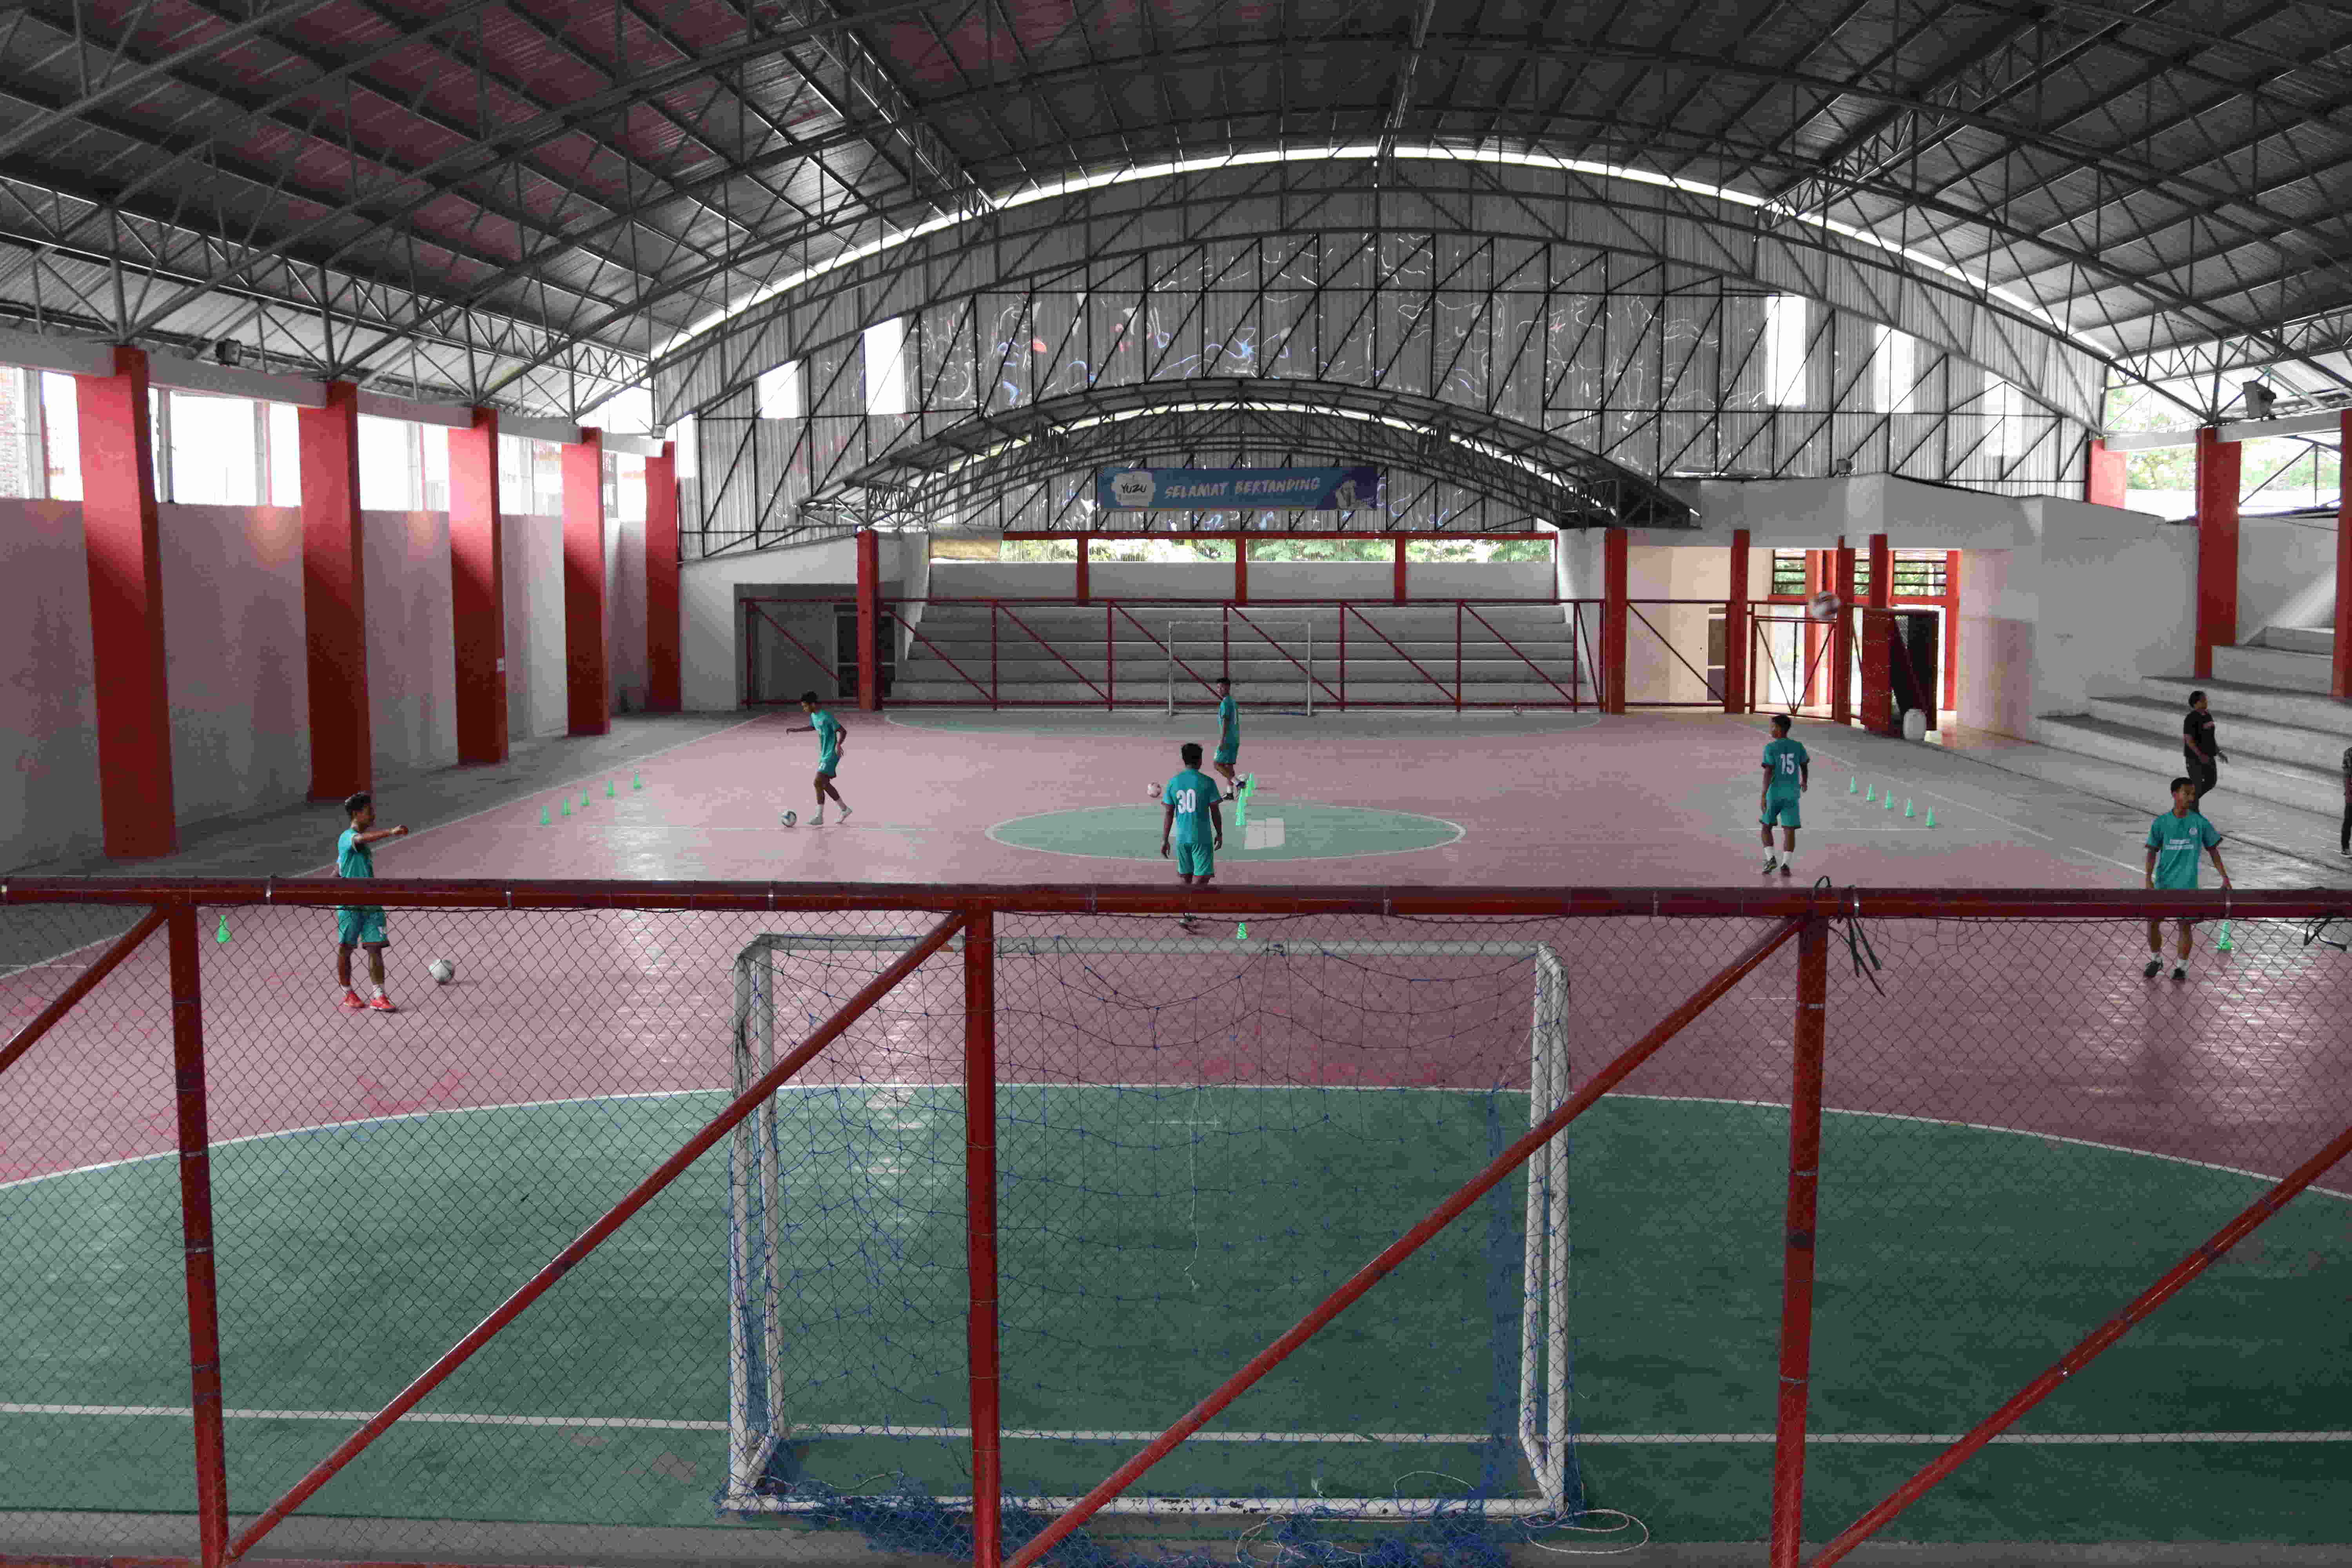 Futsal Putra